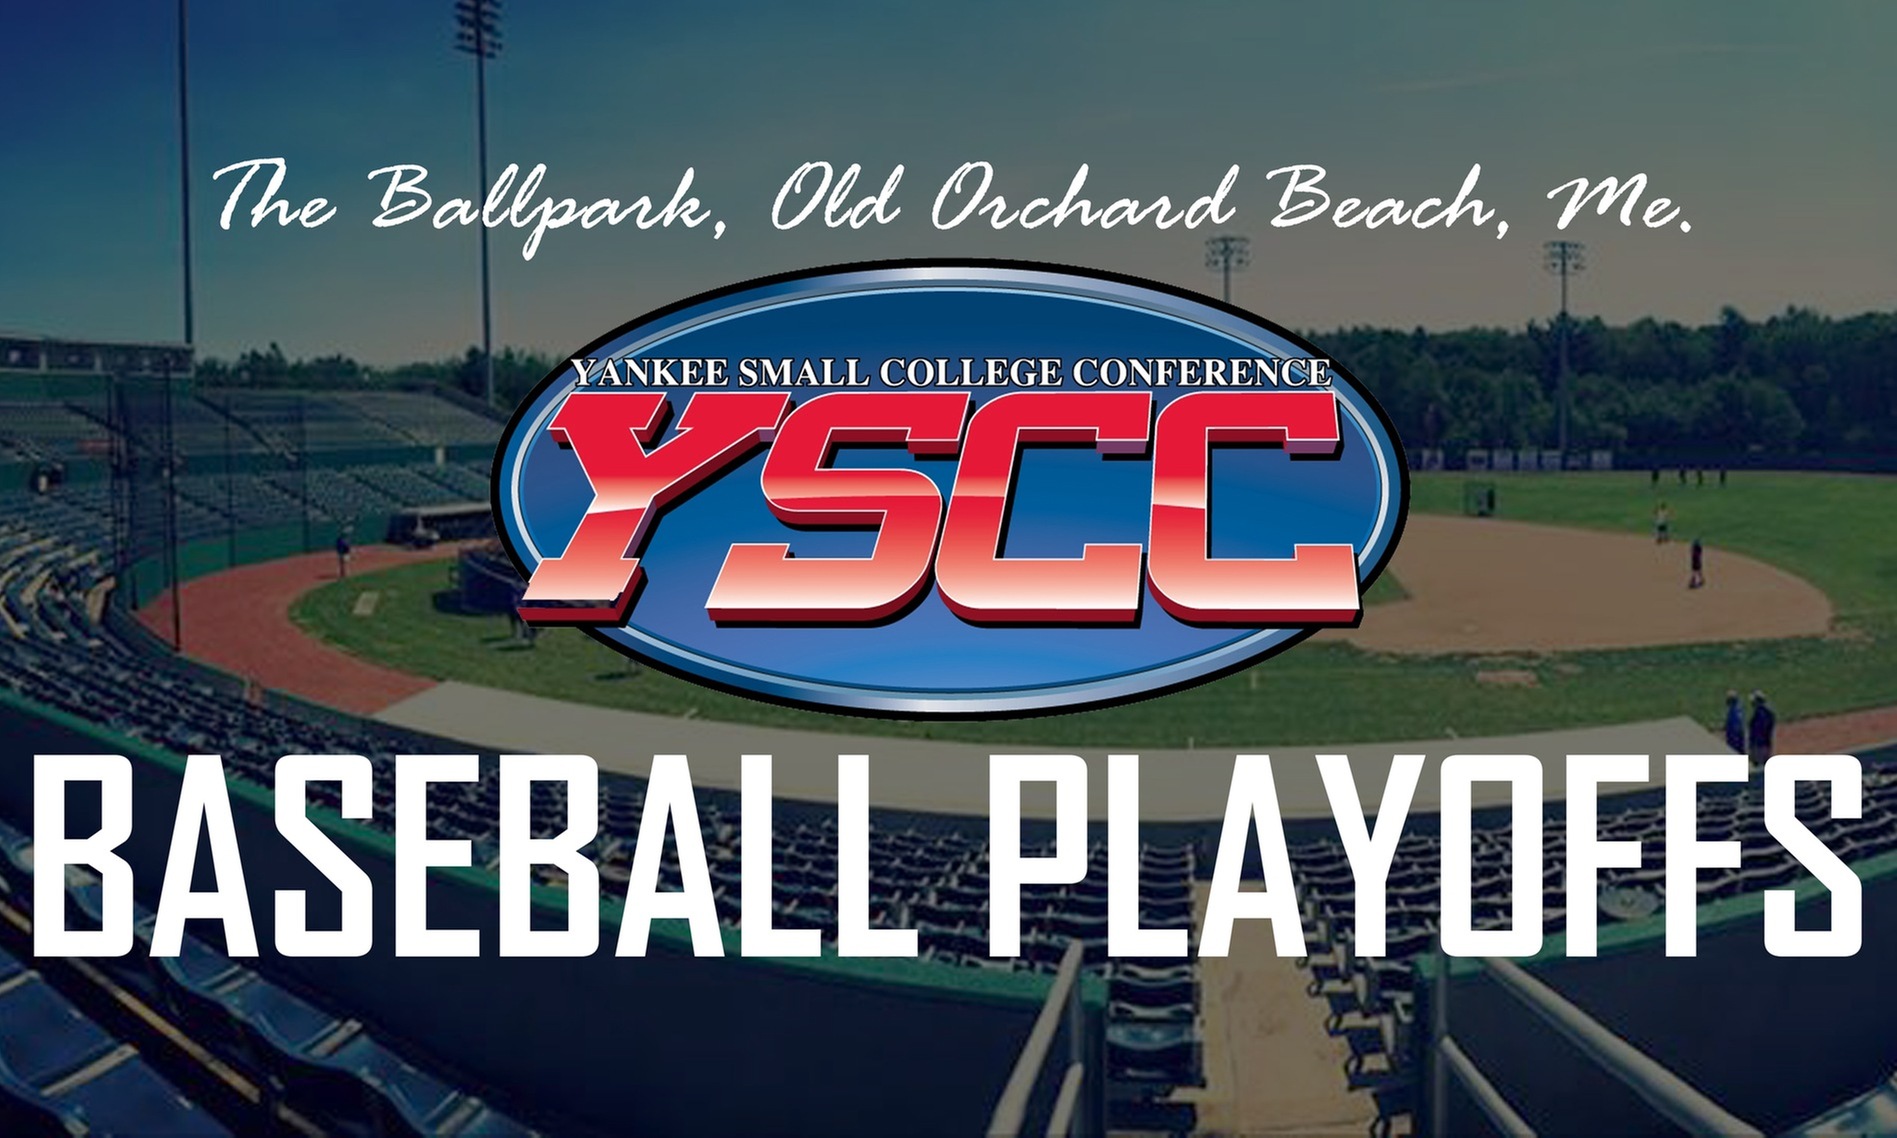 YSCC Softball and Baseball championships kick off this weekend